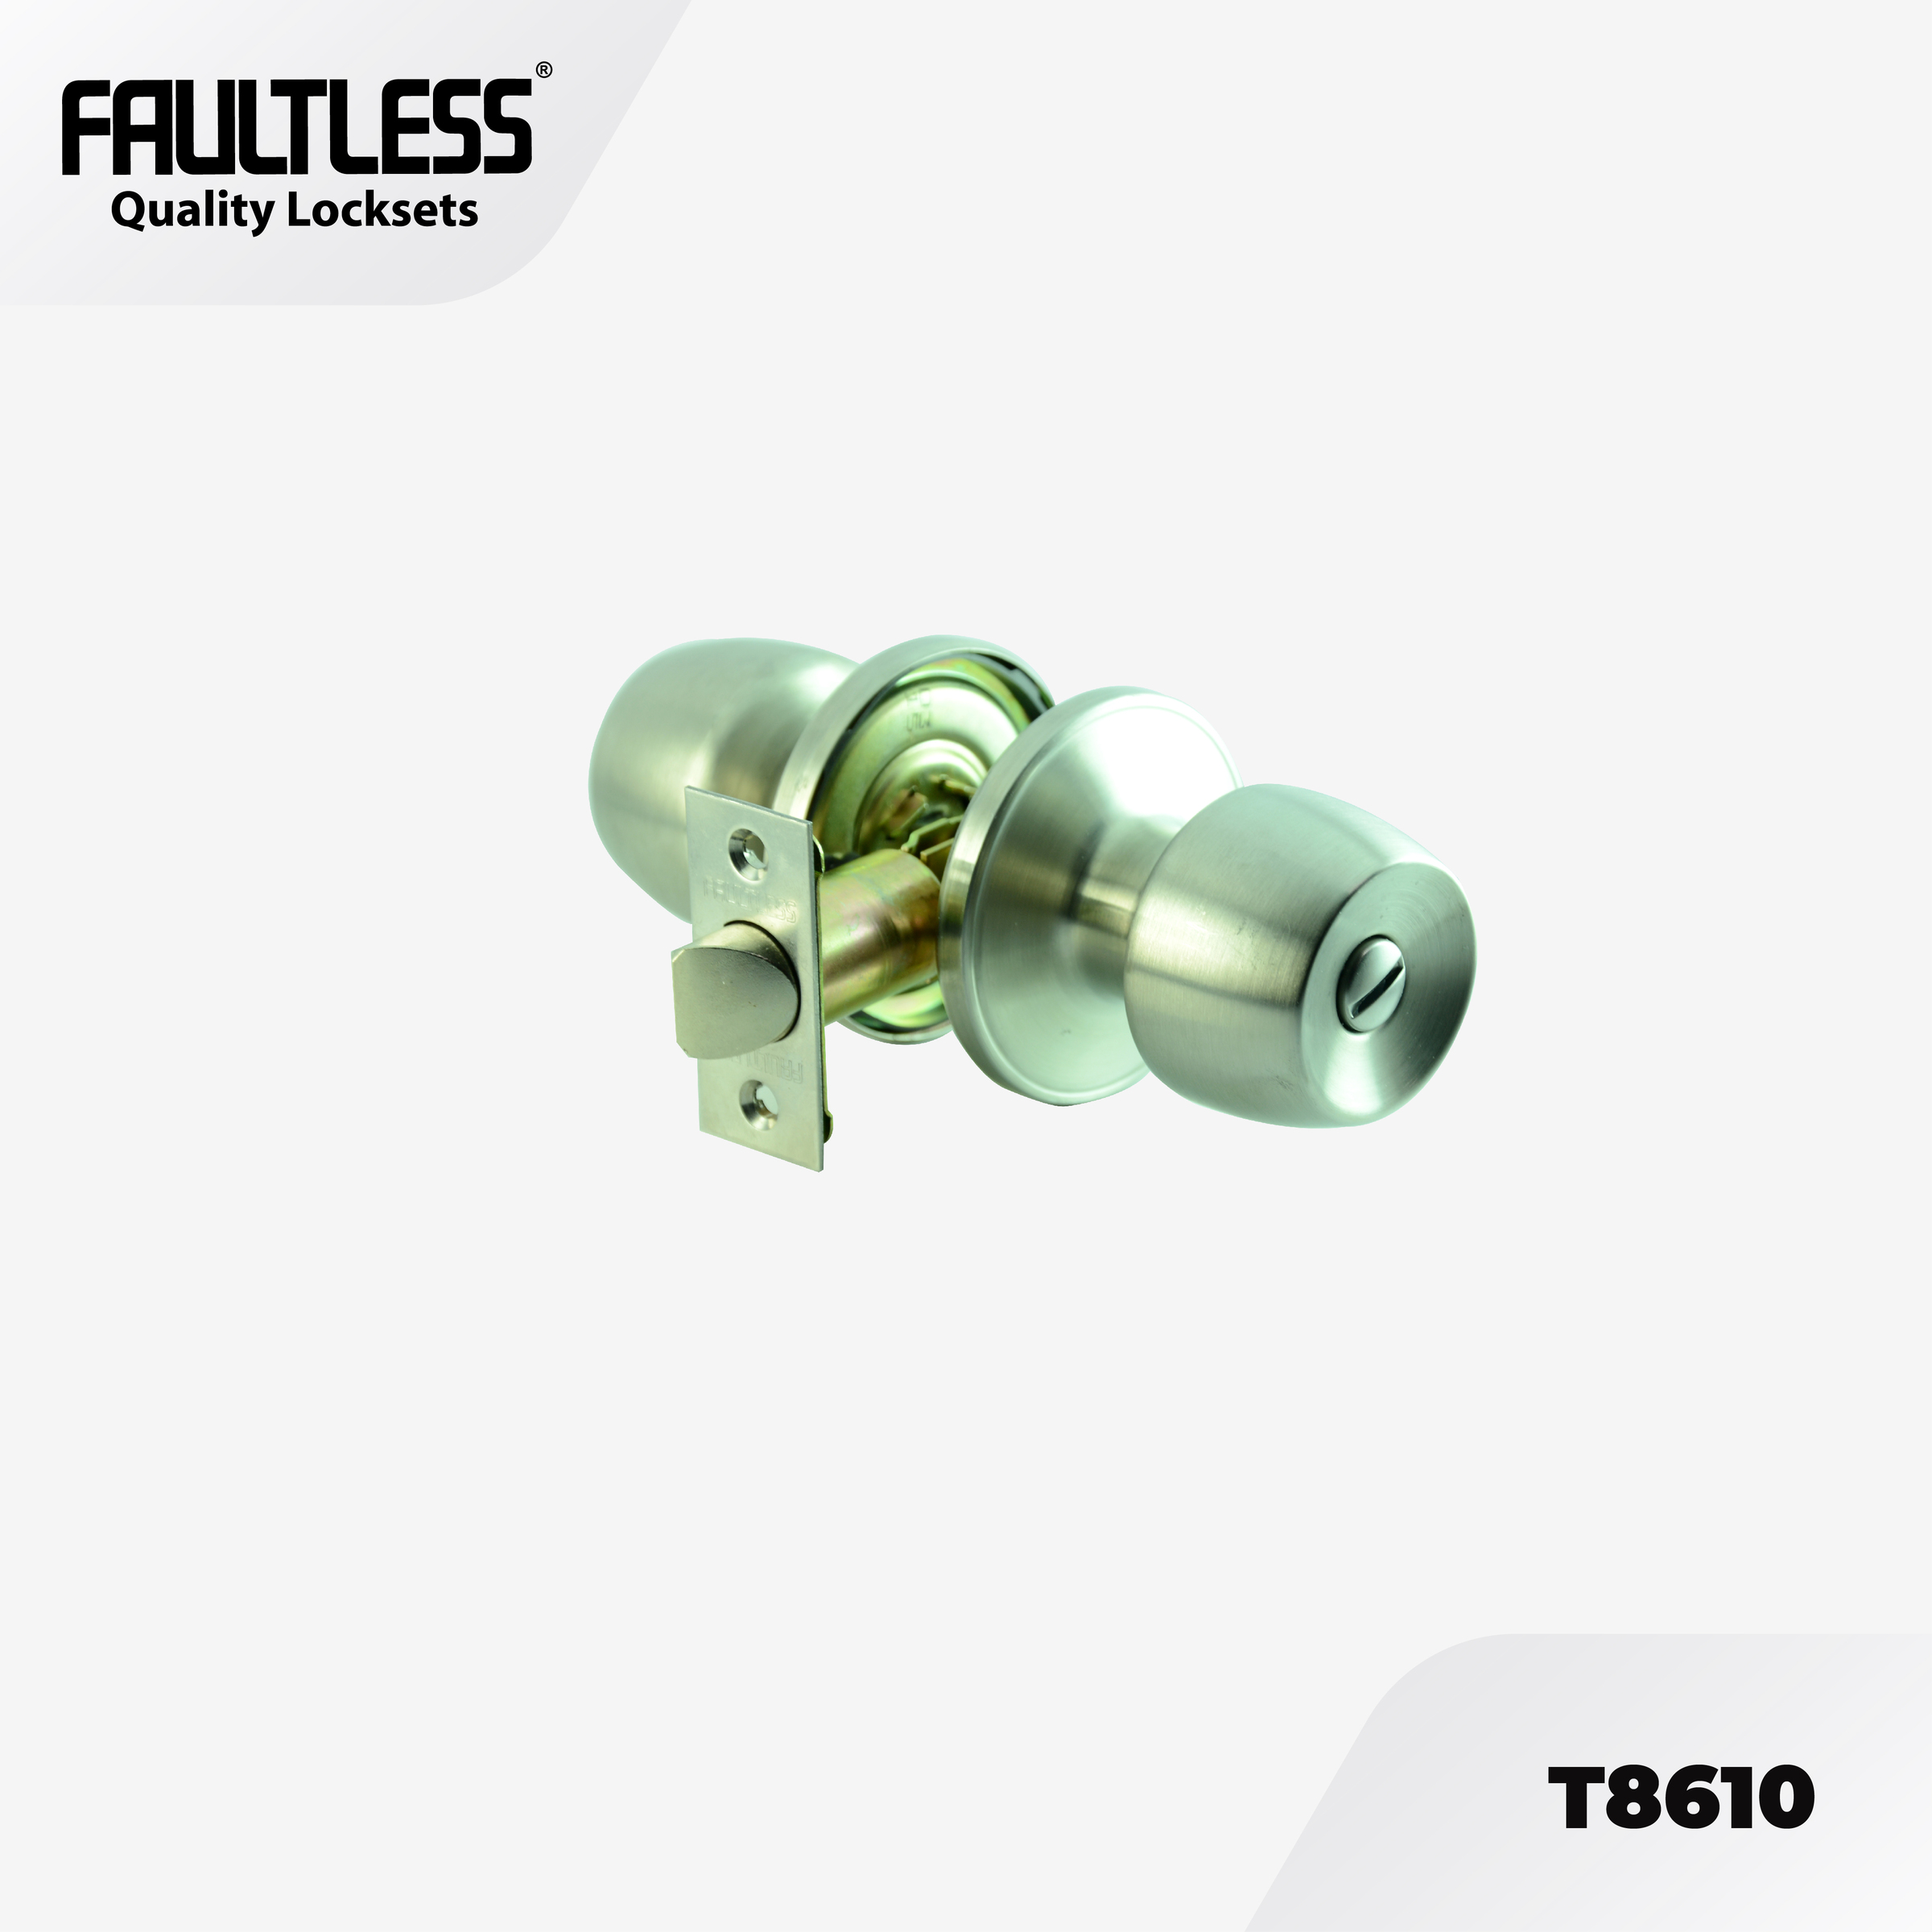 Faultless Knobset T8610 Visual Pack